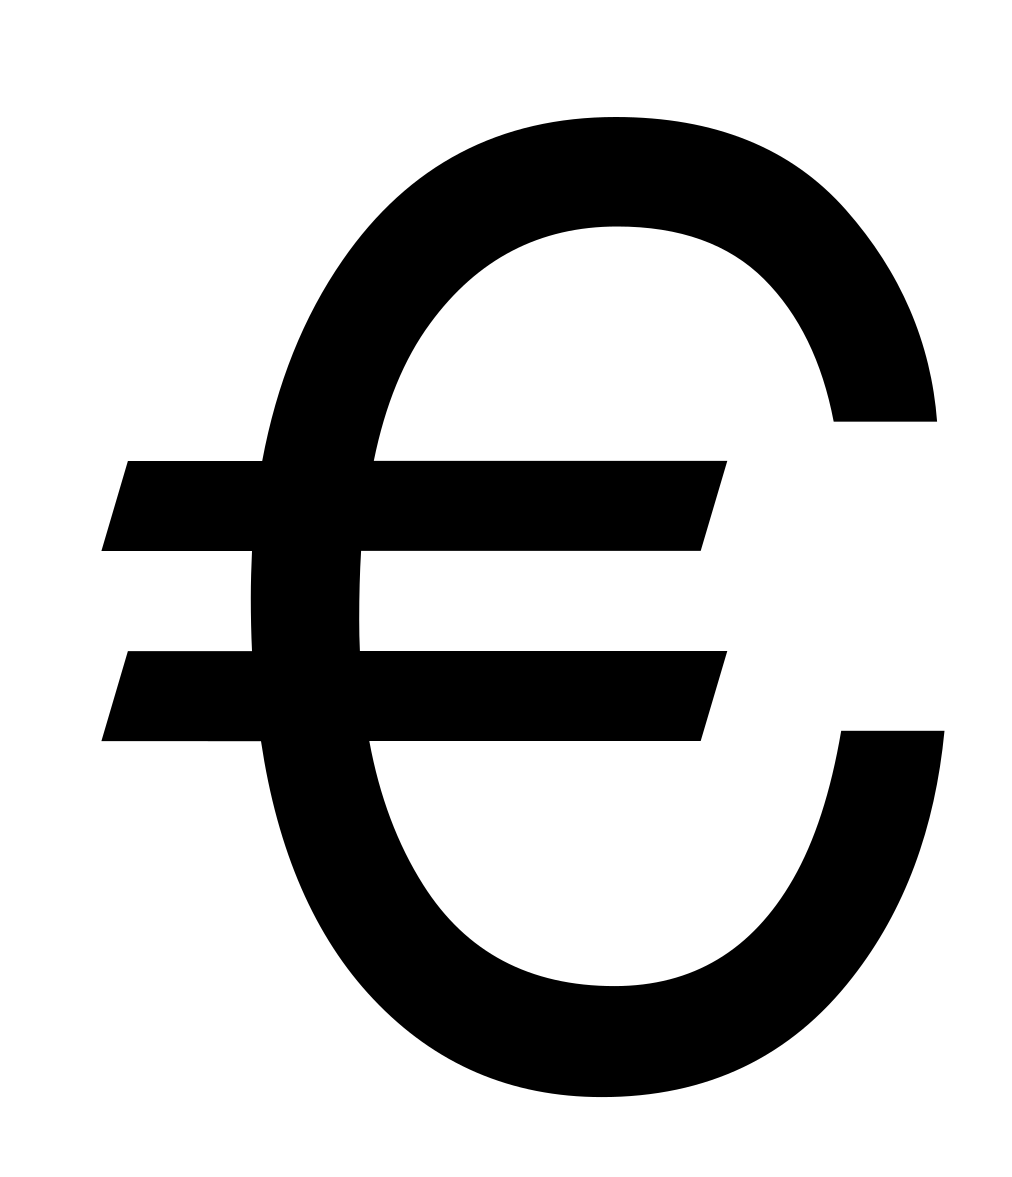 Euro Symbol PNG Image in High Definition pngteam.com